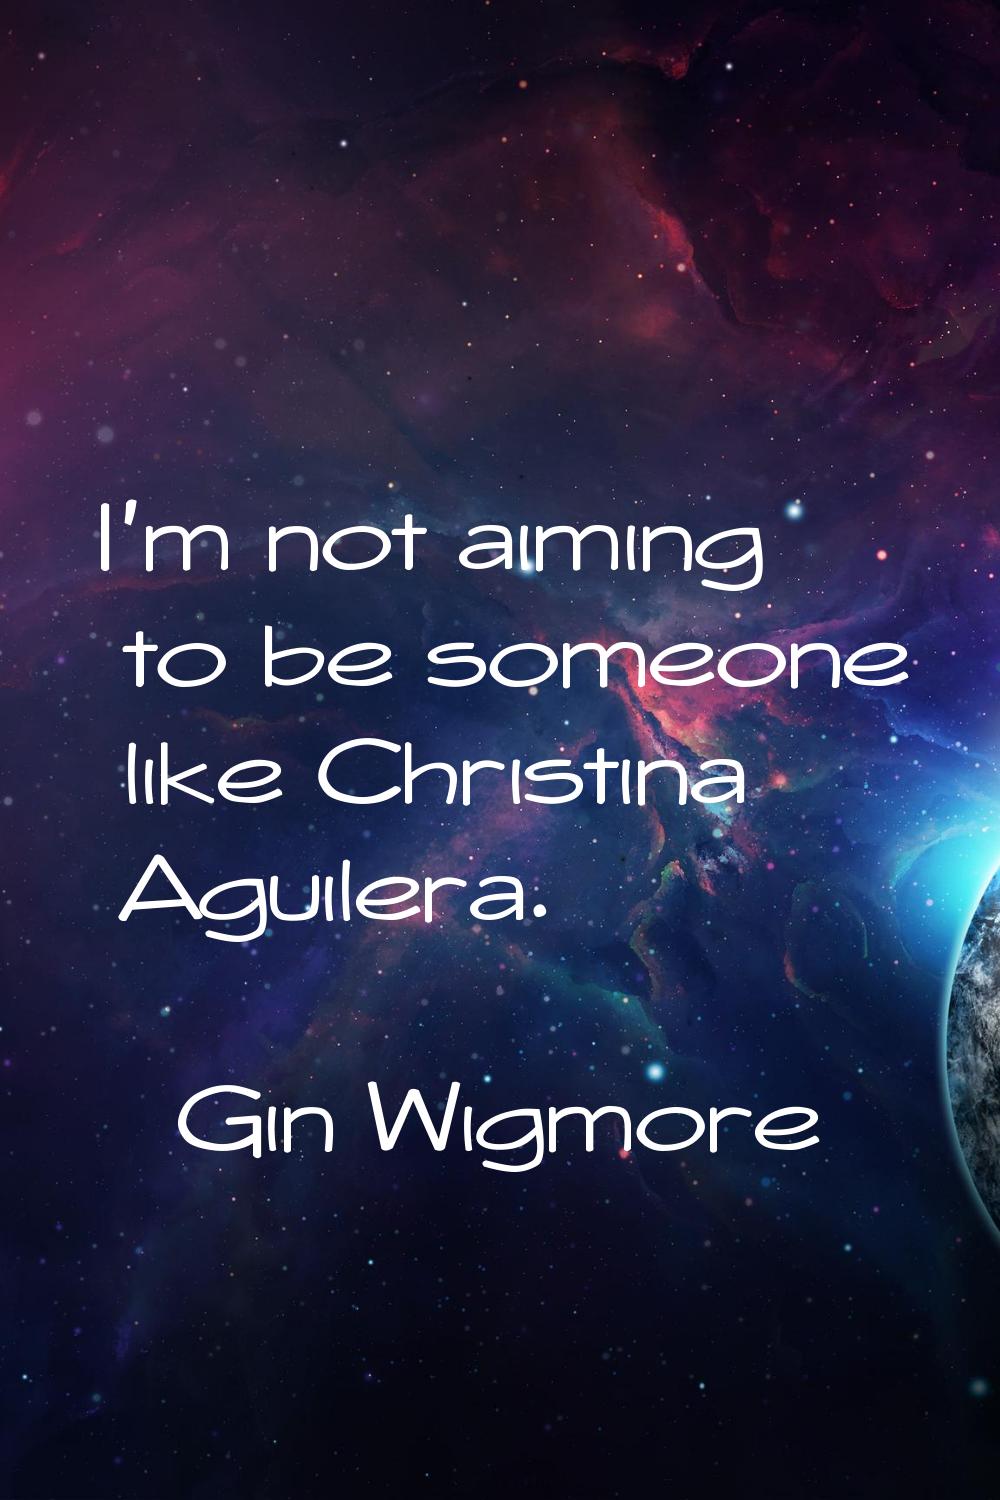 I'm not aiming to be someone like Christina Aguilera.